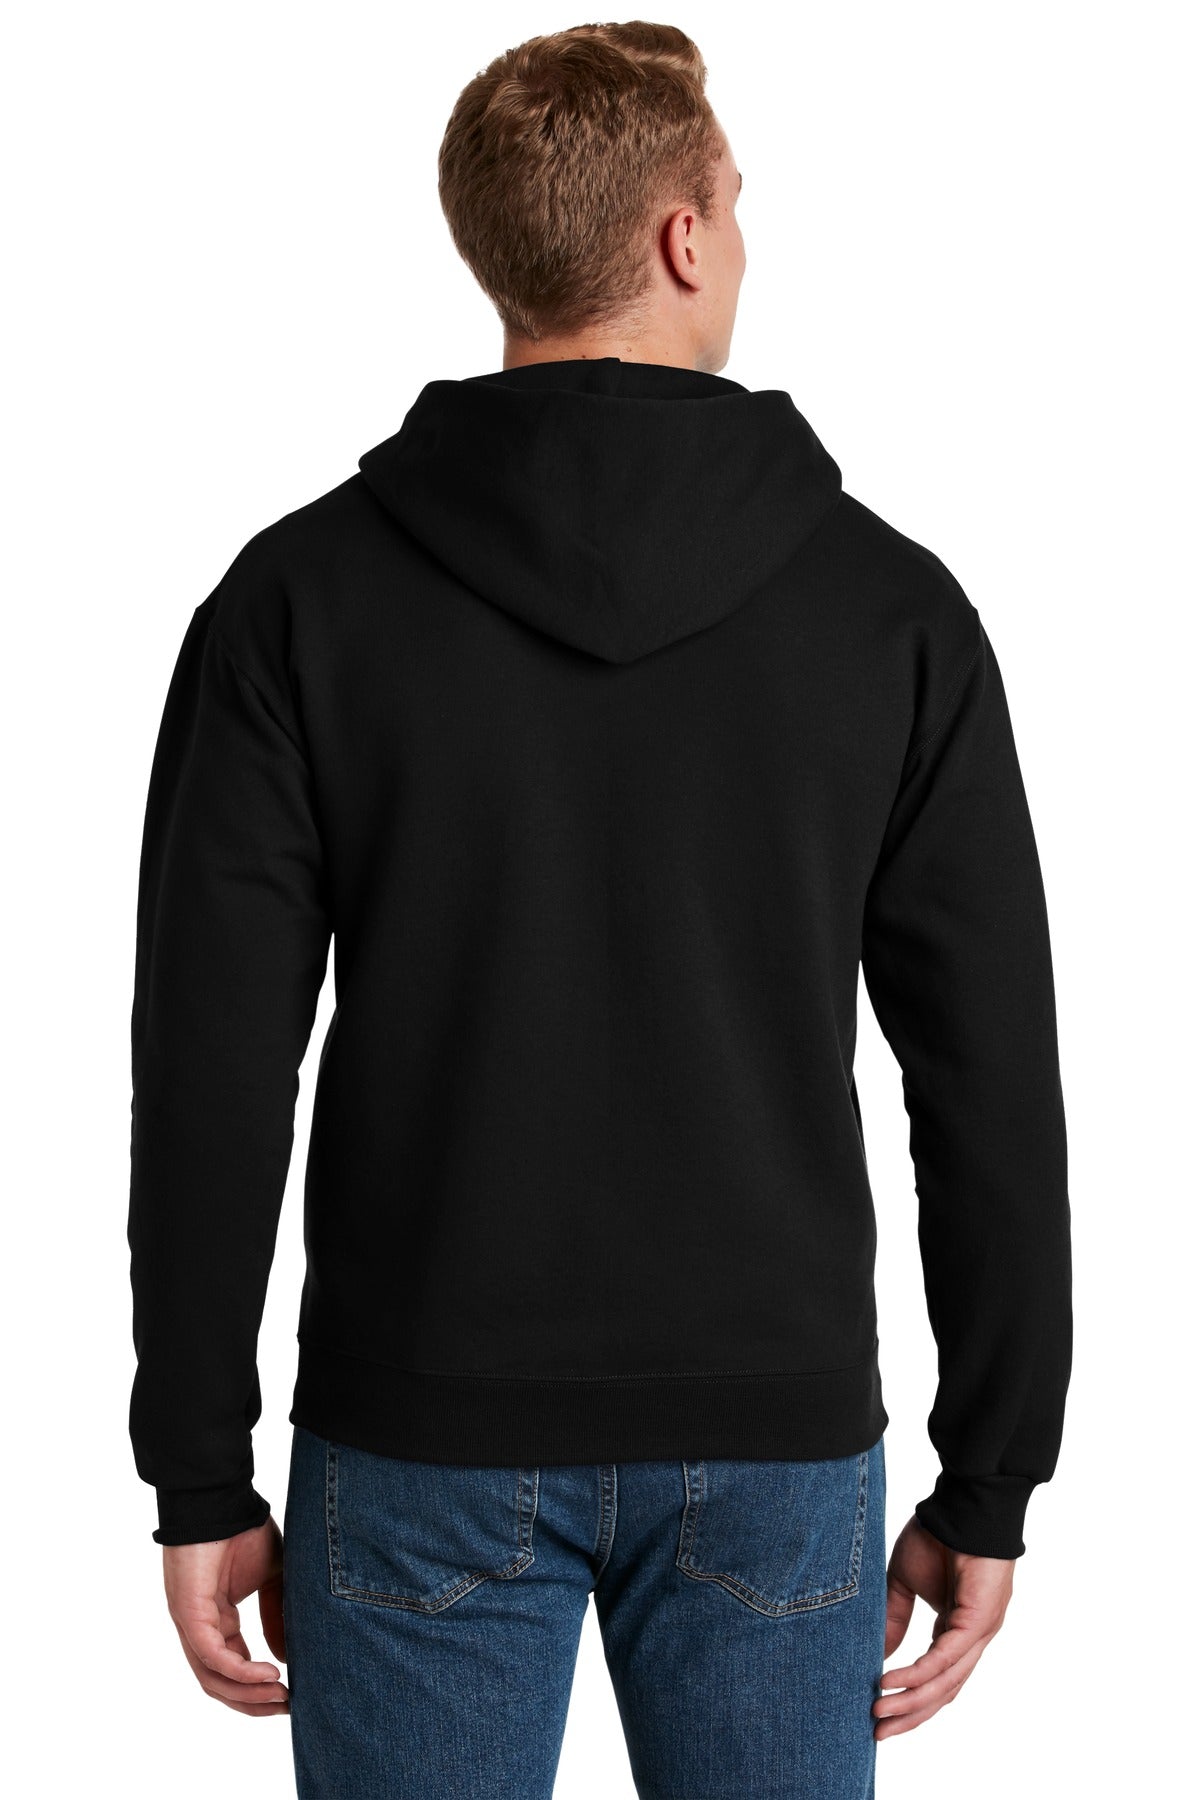 Jerzees Super Sweats NuBlend - Full-Zip Hooded Sweatshirt. 4999M